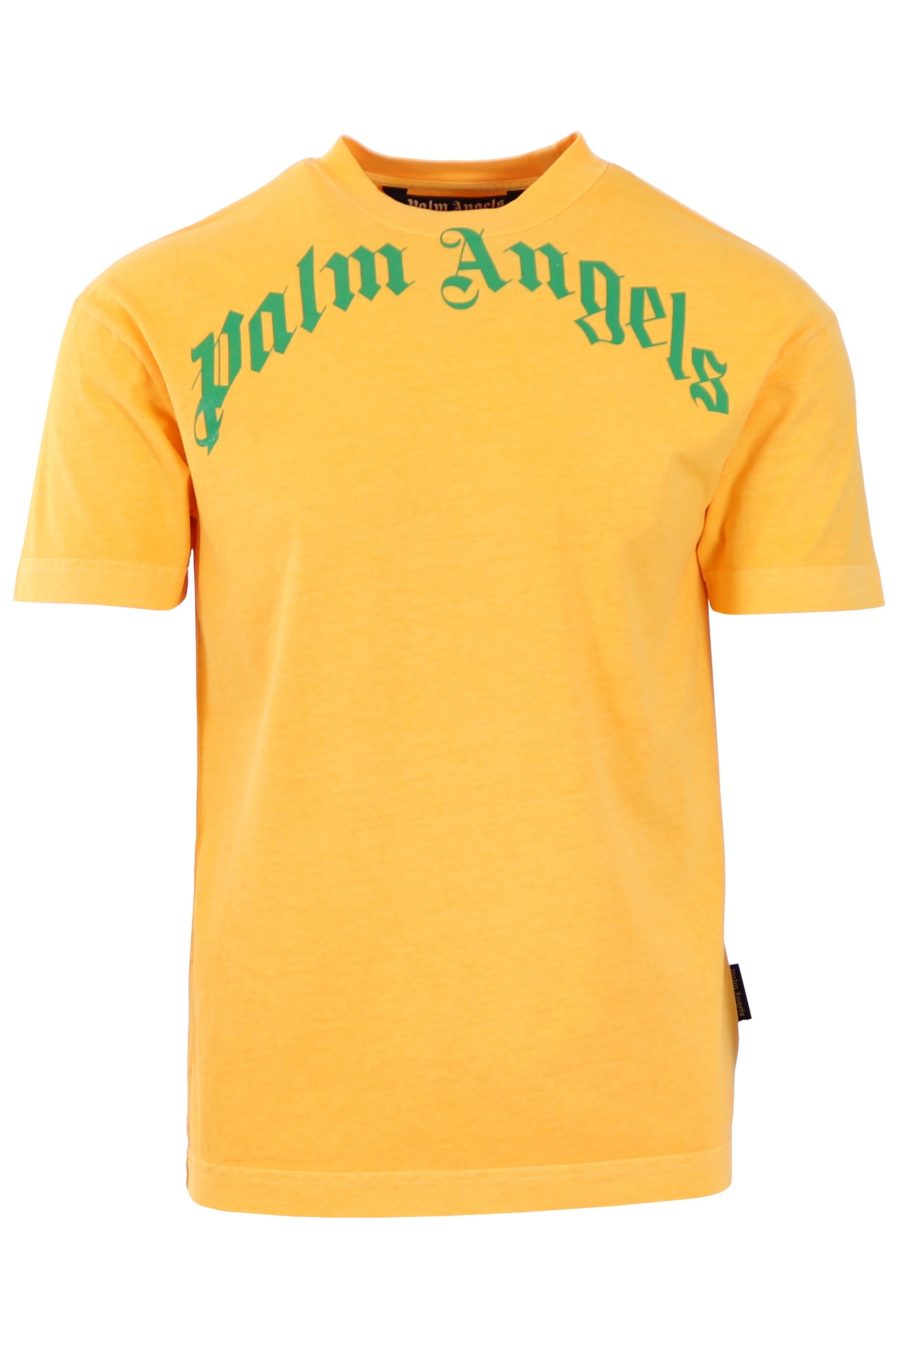 Palm Angels - Camiseta Palm Angels azul con logo amarillo vertical - BLS  Fashion